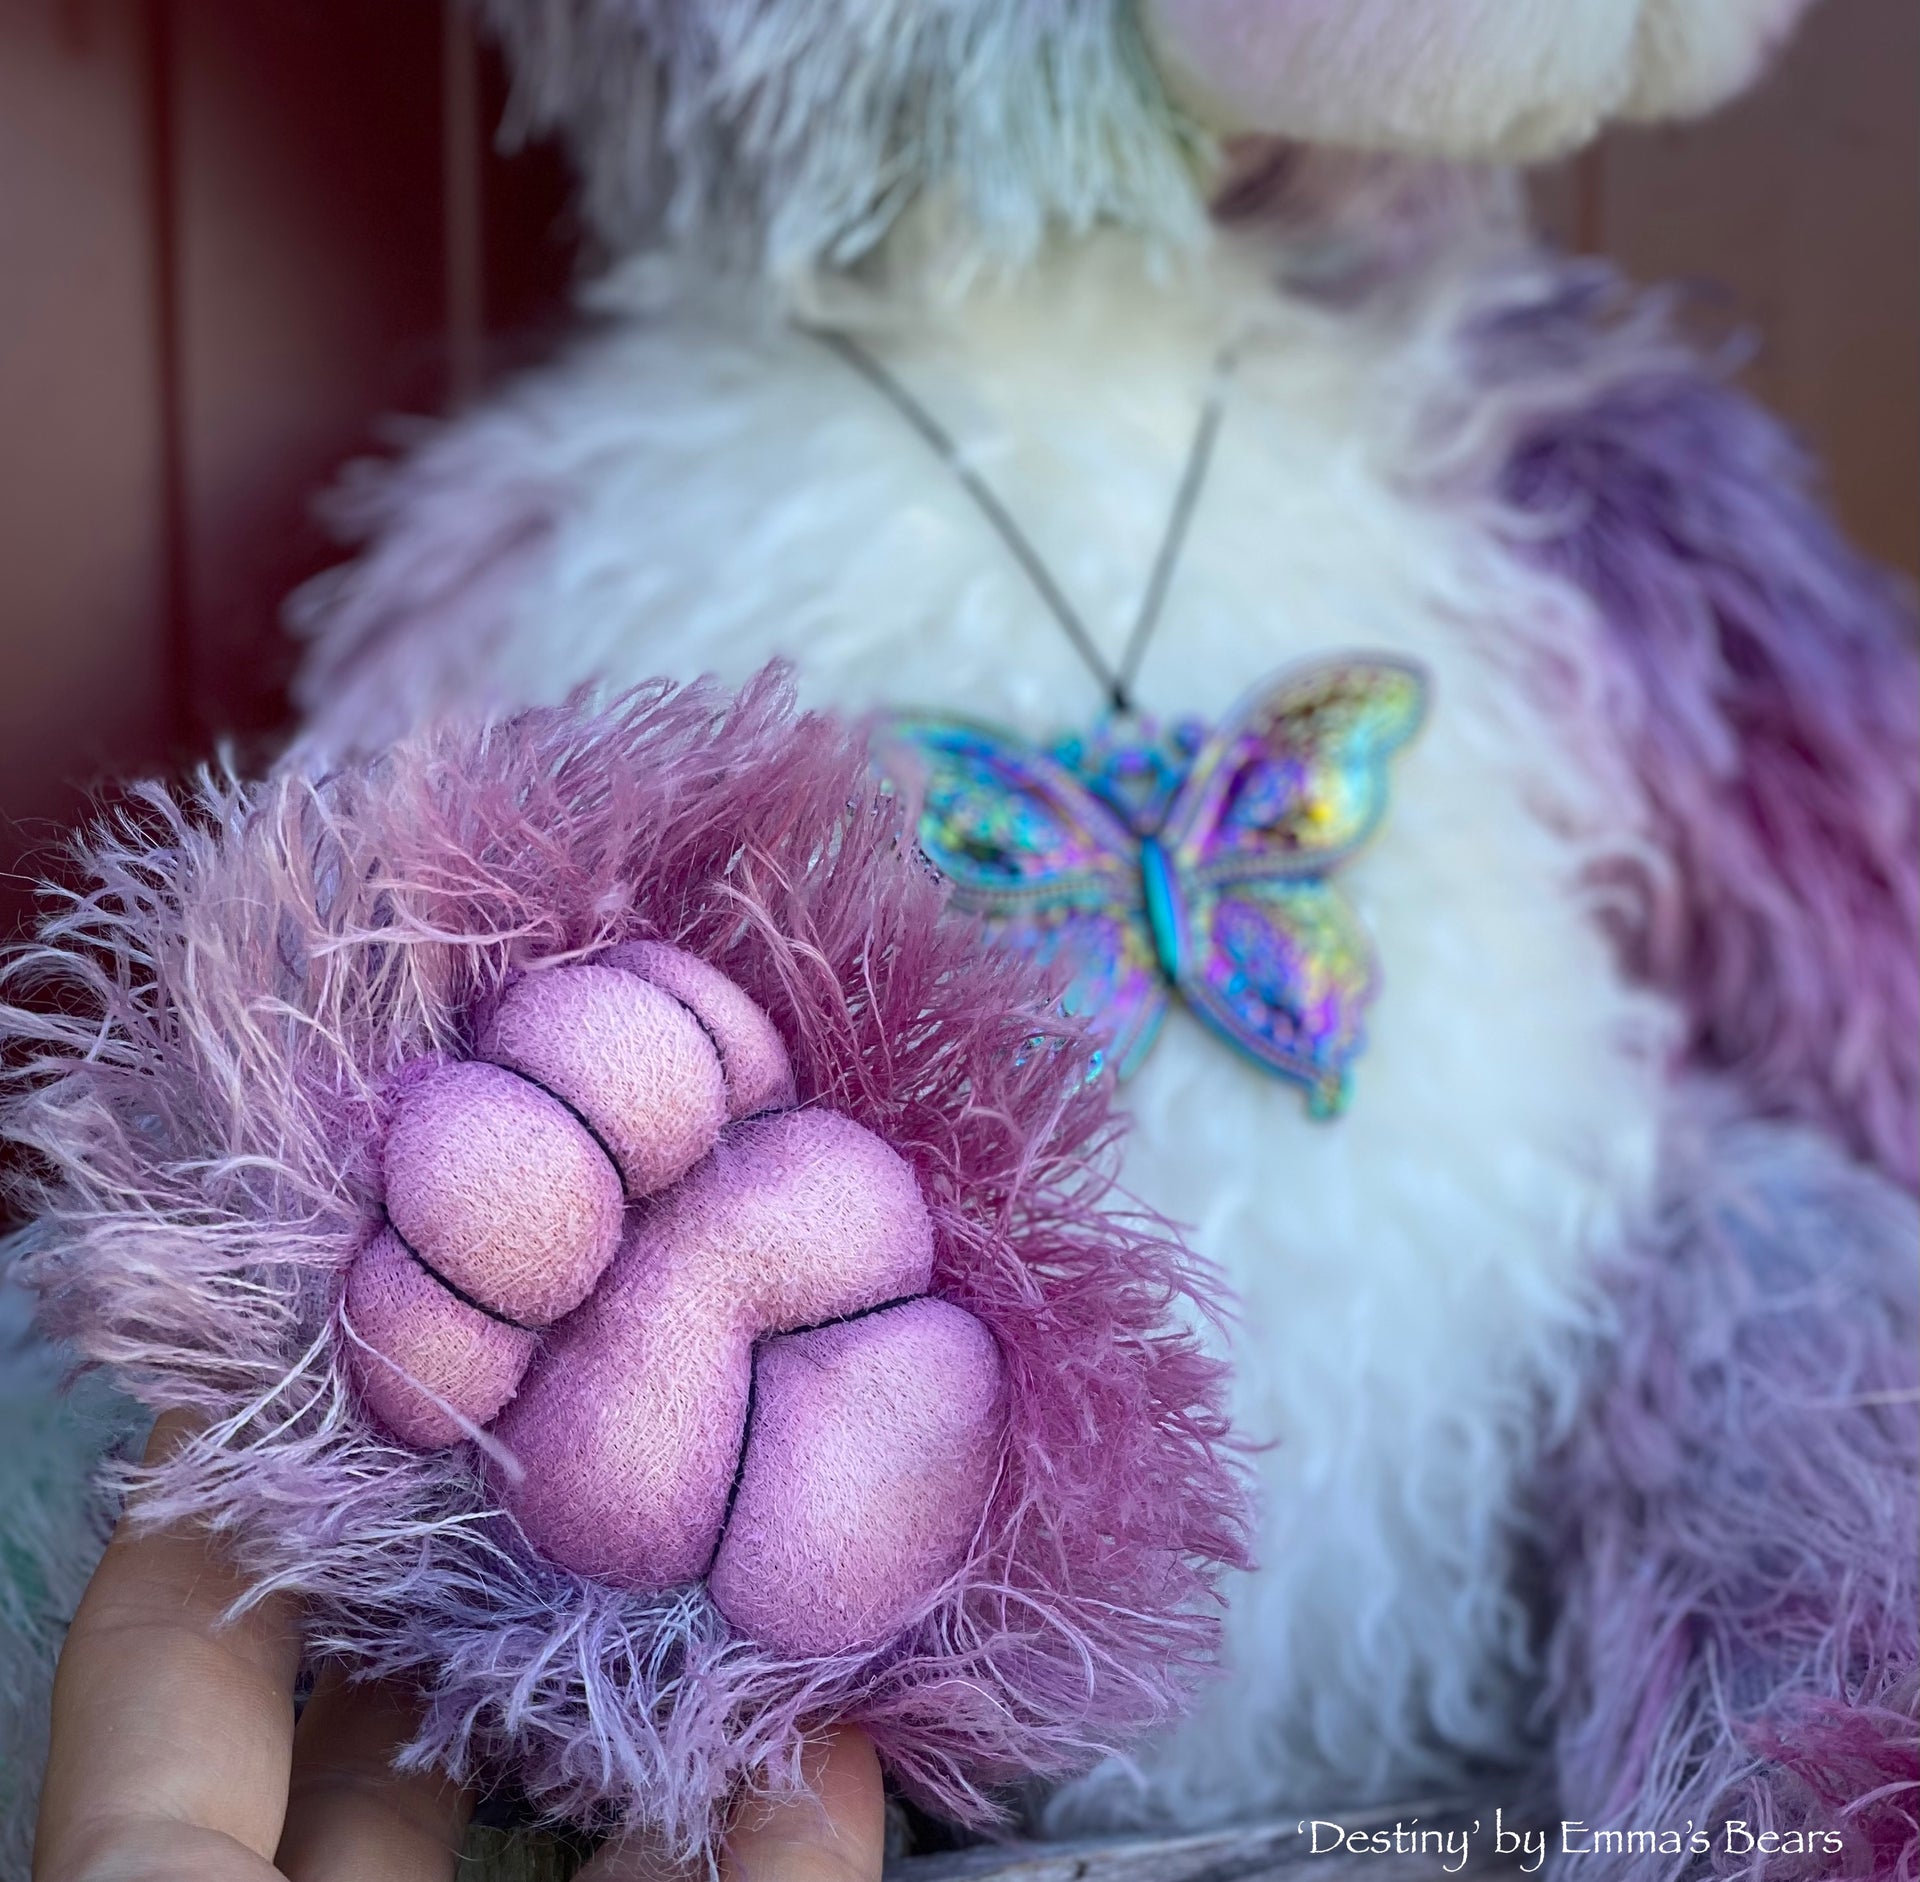 Destiny - 18" Hand-dyed Mohair Artist Bear by Emmas Bears - OOAK